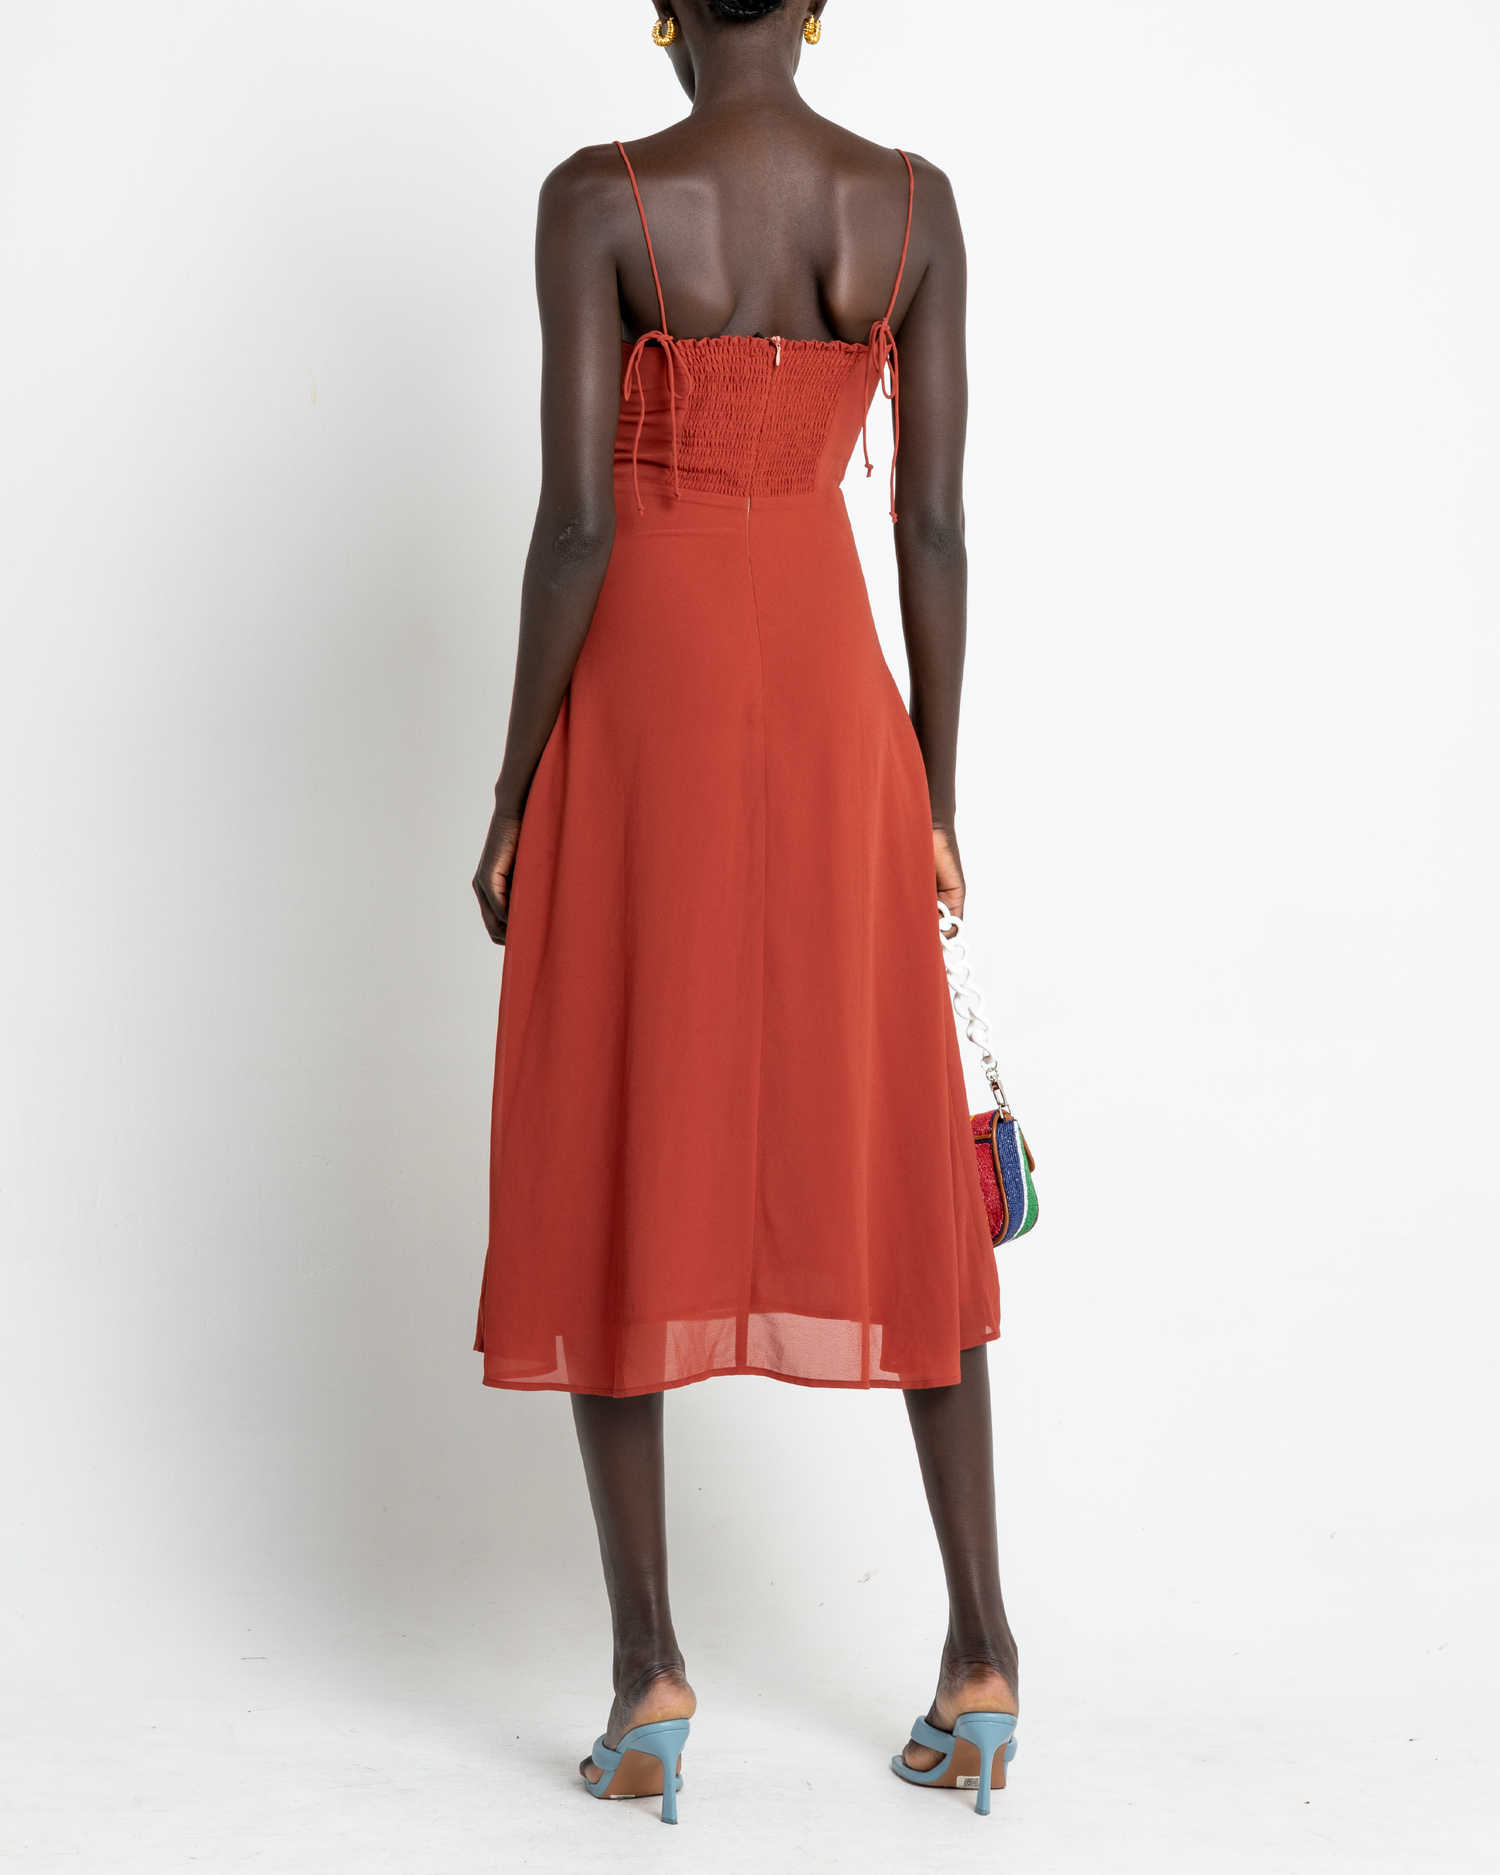 Second image of Venus Dress, a orange midi dress, tie straps, spaghetti straps, side slit, bodice